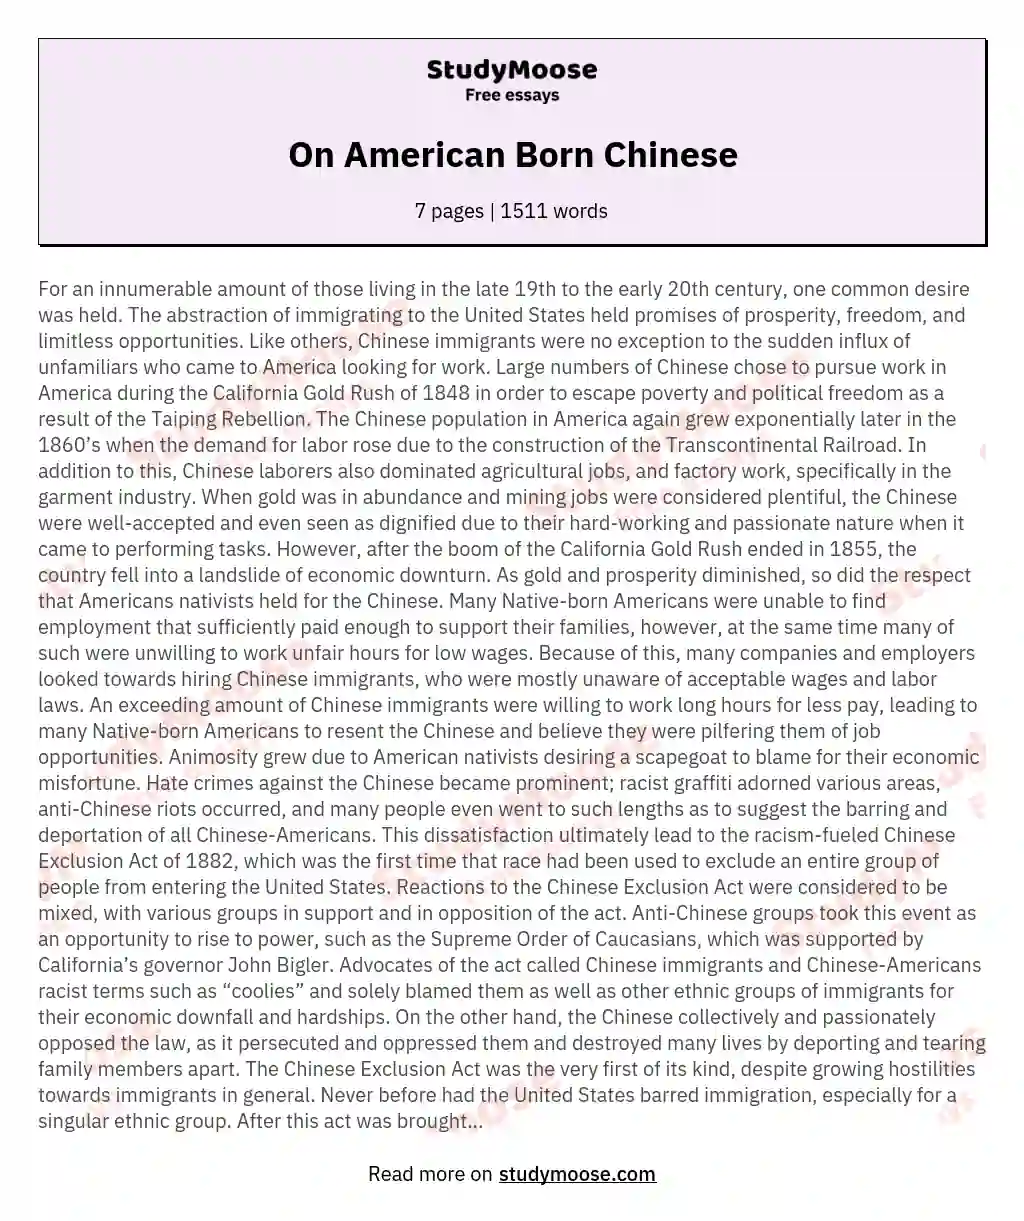 On American Born Chinese essay